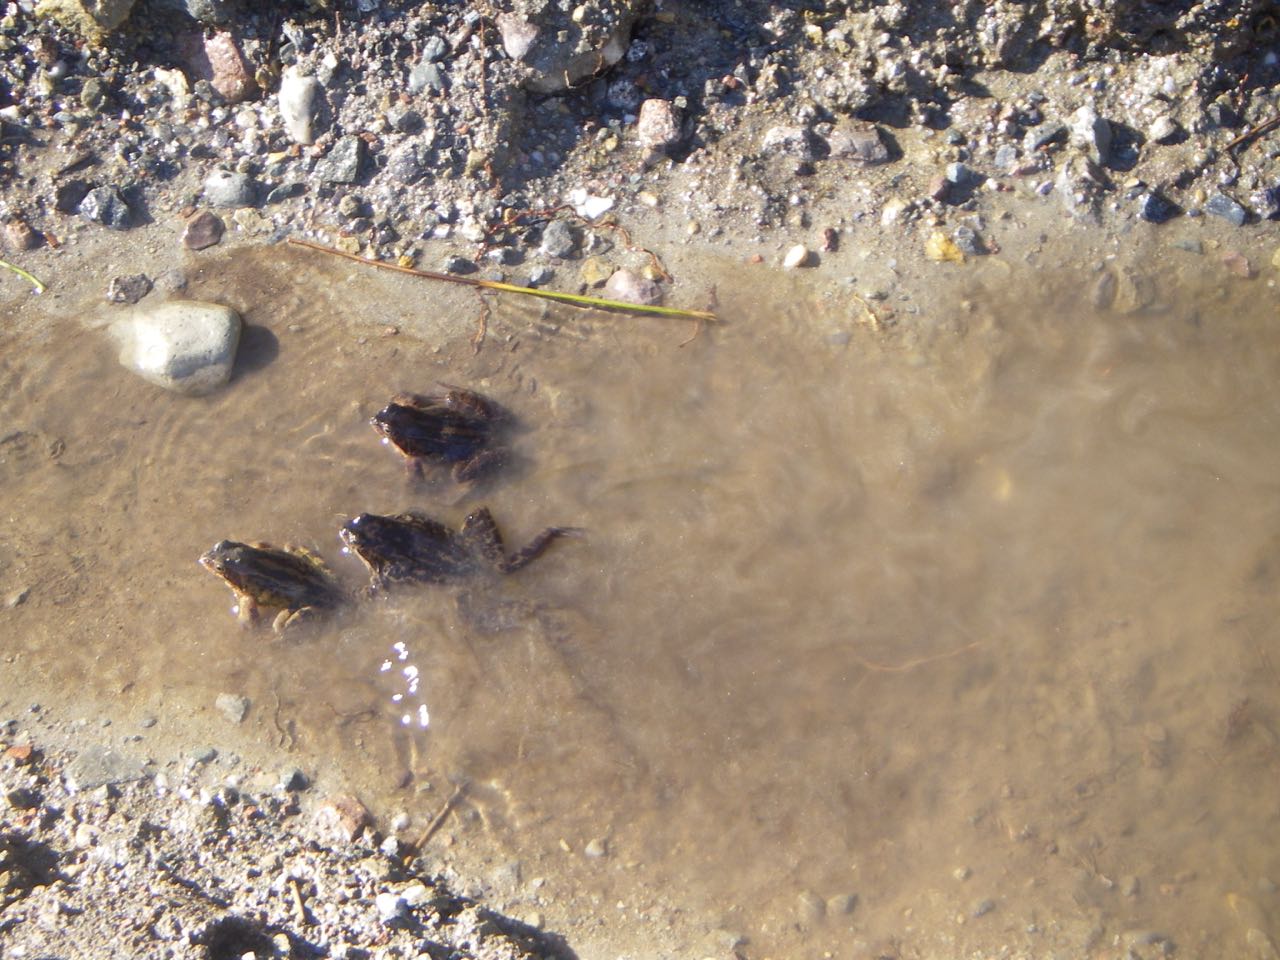 Plenty of Glen Coe frogs enjoying the sunshine.